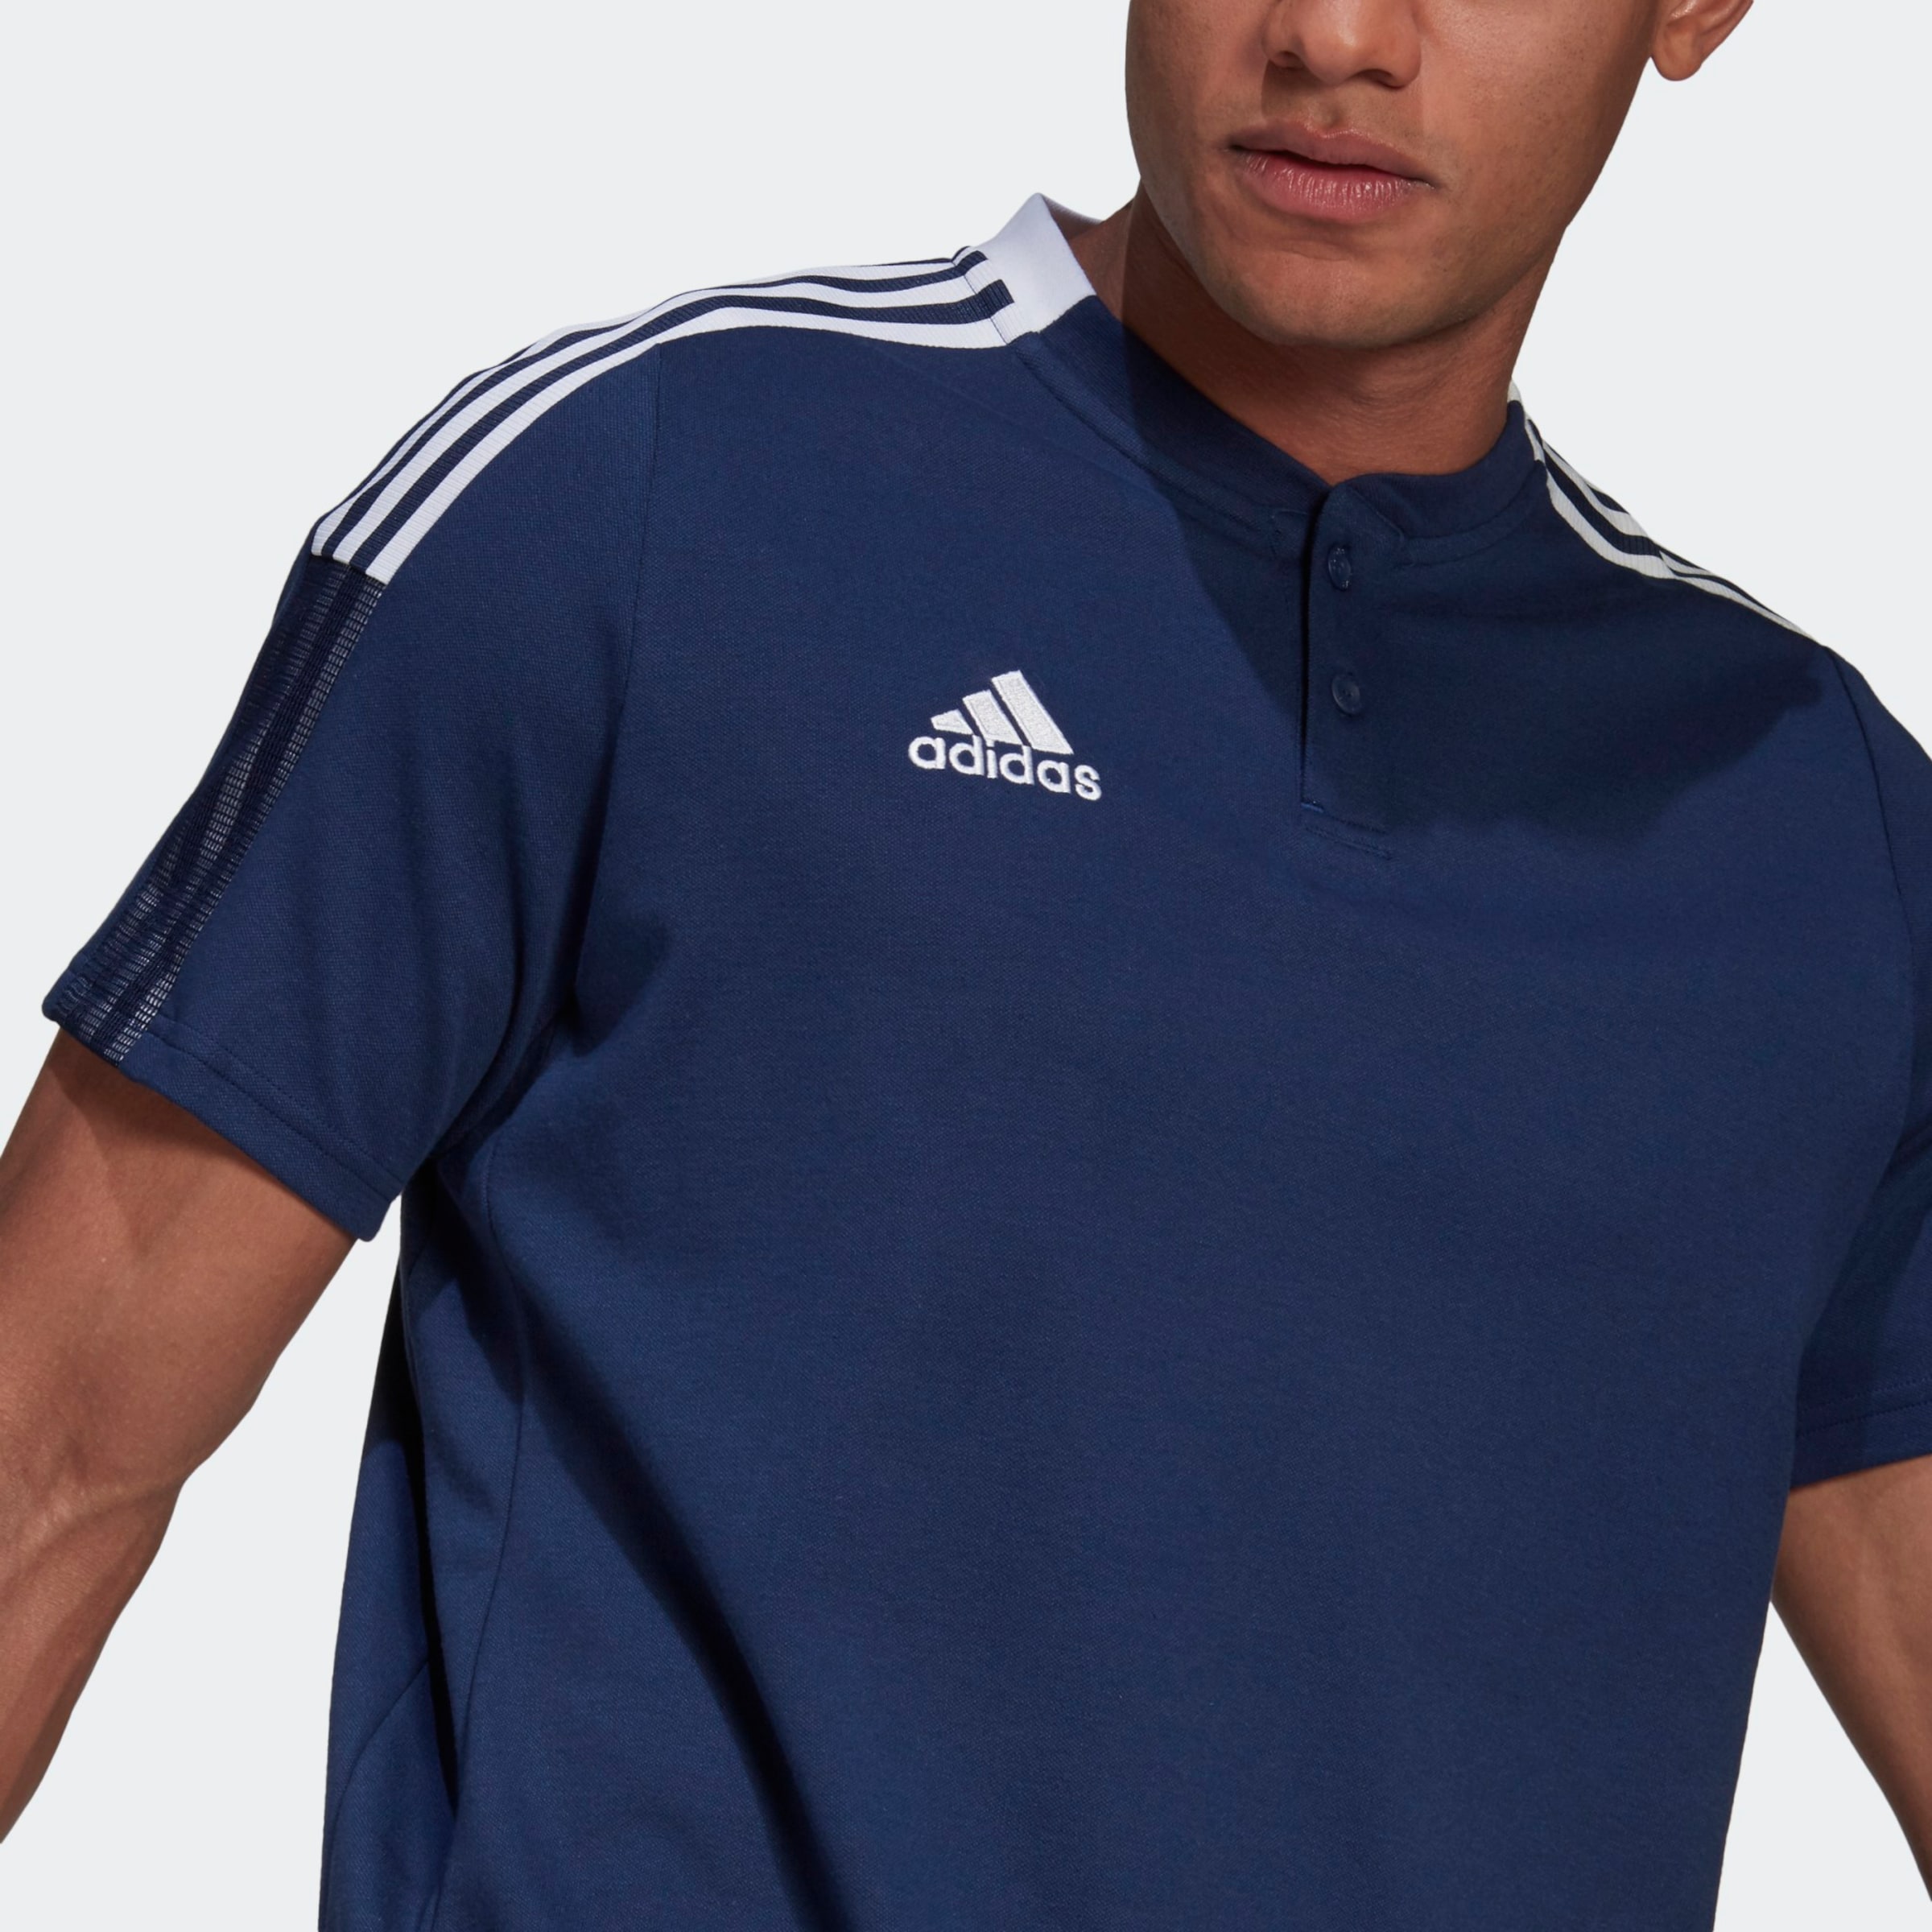 Männer Sportarten ADIDAS PERFORMANCE Shirt in Blau - GB70610